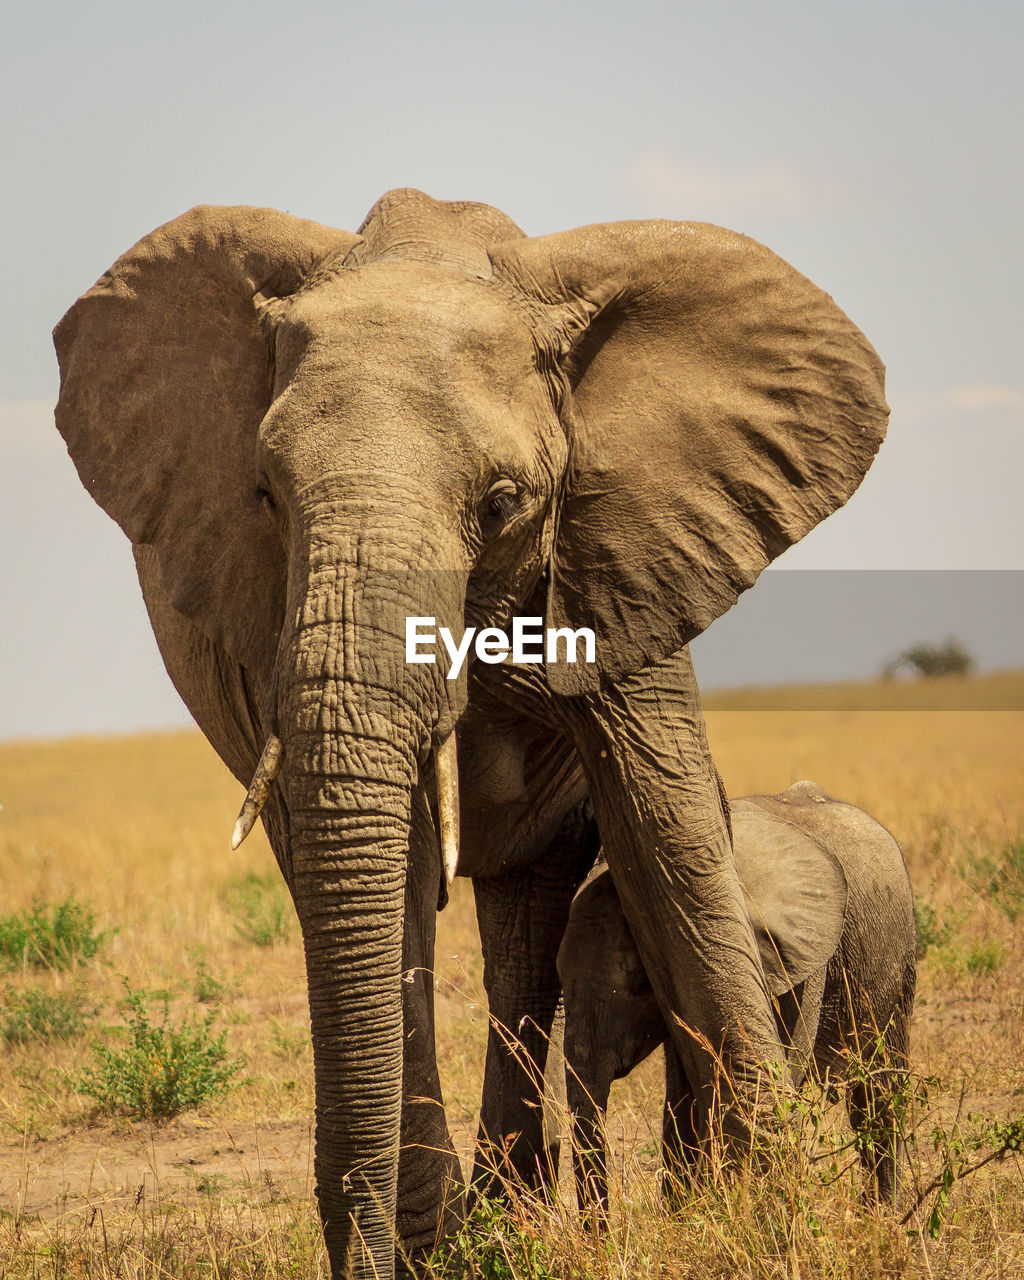 Elephant with calf in savannah, kenya